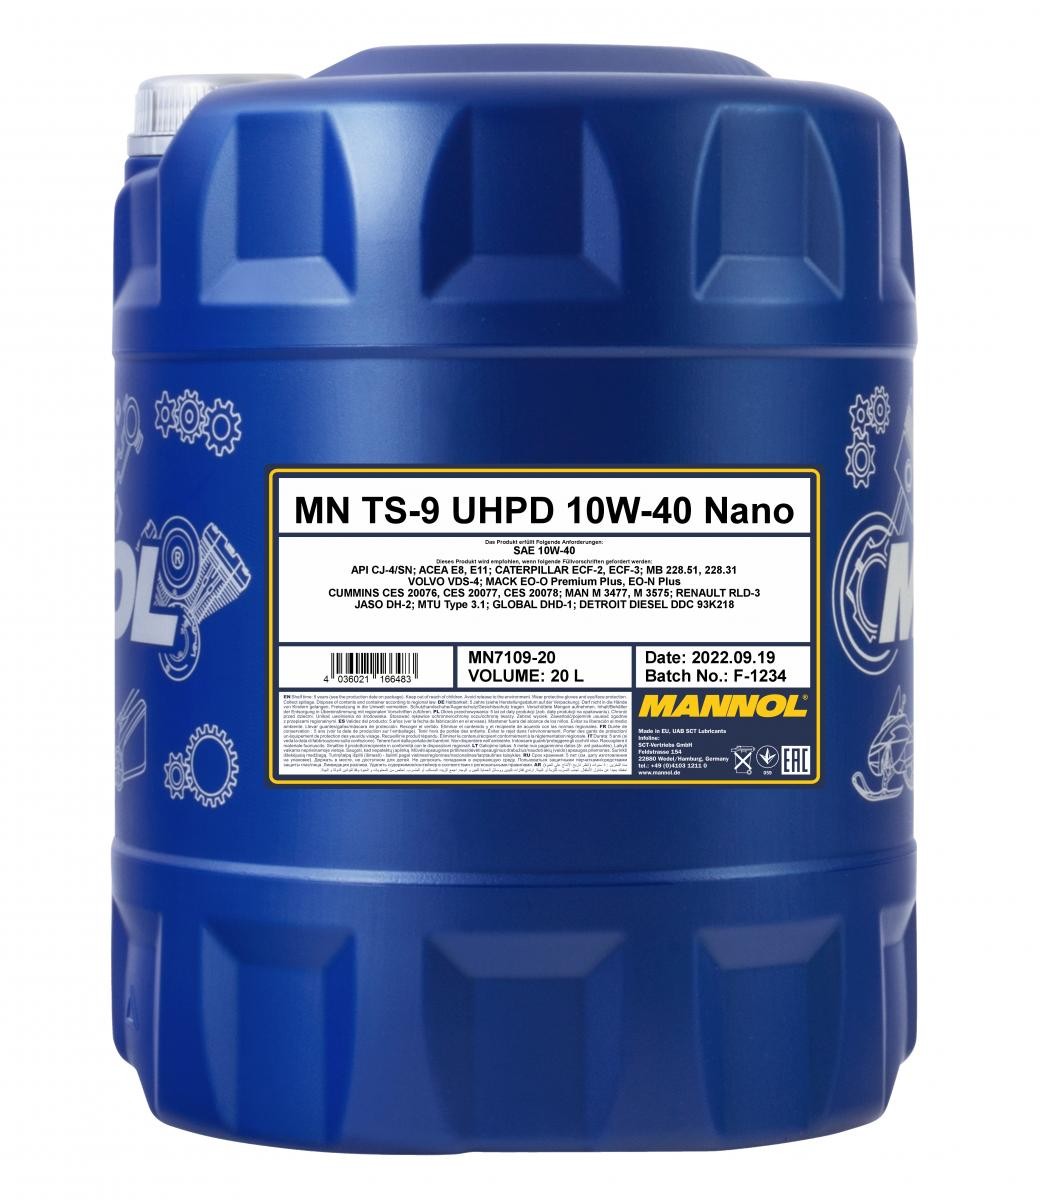 MN7109-20 MANNOL TS-9, UHPD Nano 10W-40, 20l, Teilsynthetiköl Motoröl MN7109-20 günstig kaufen